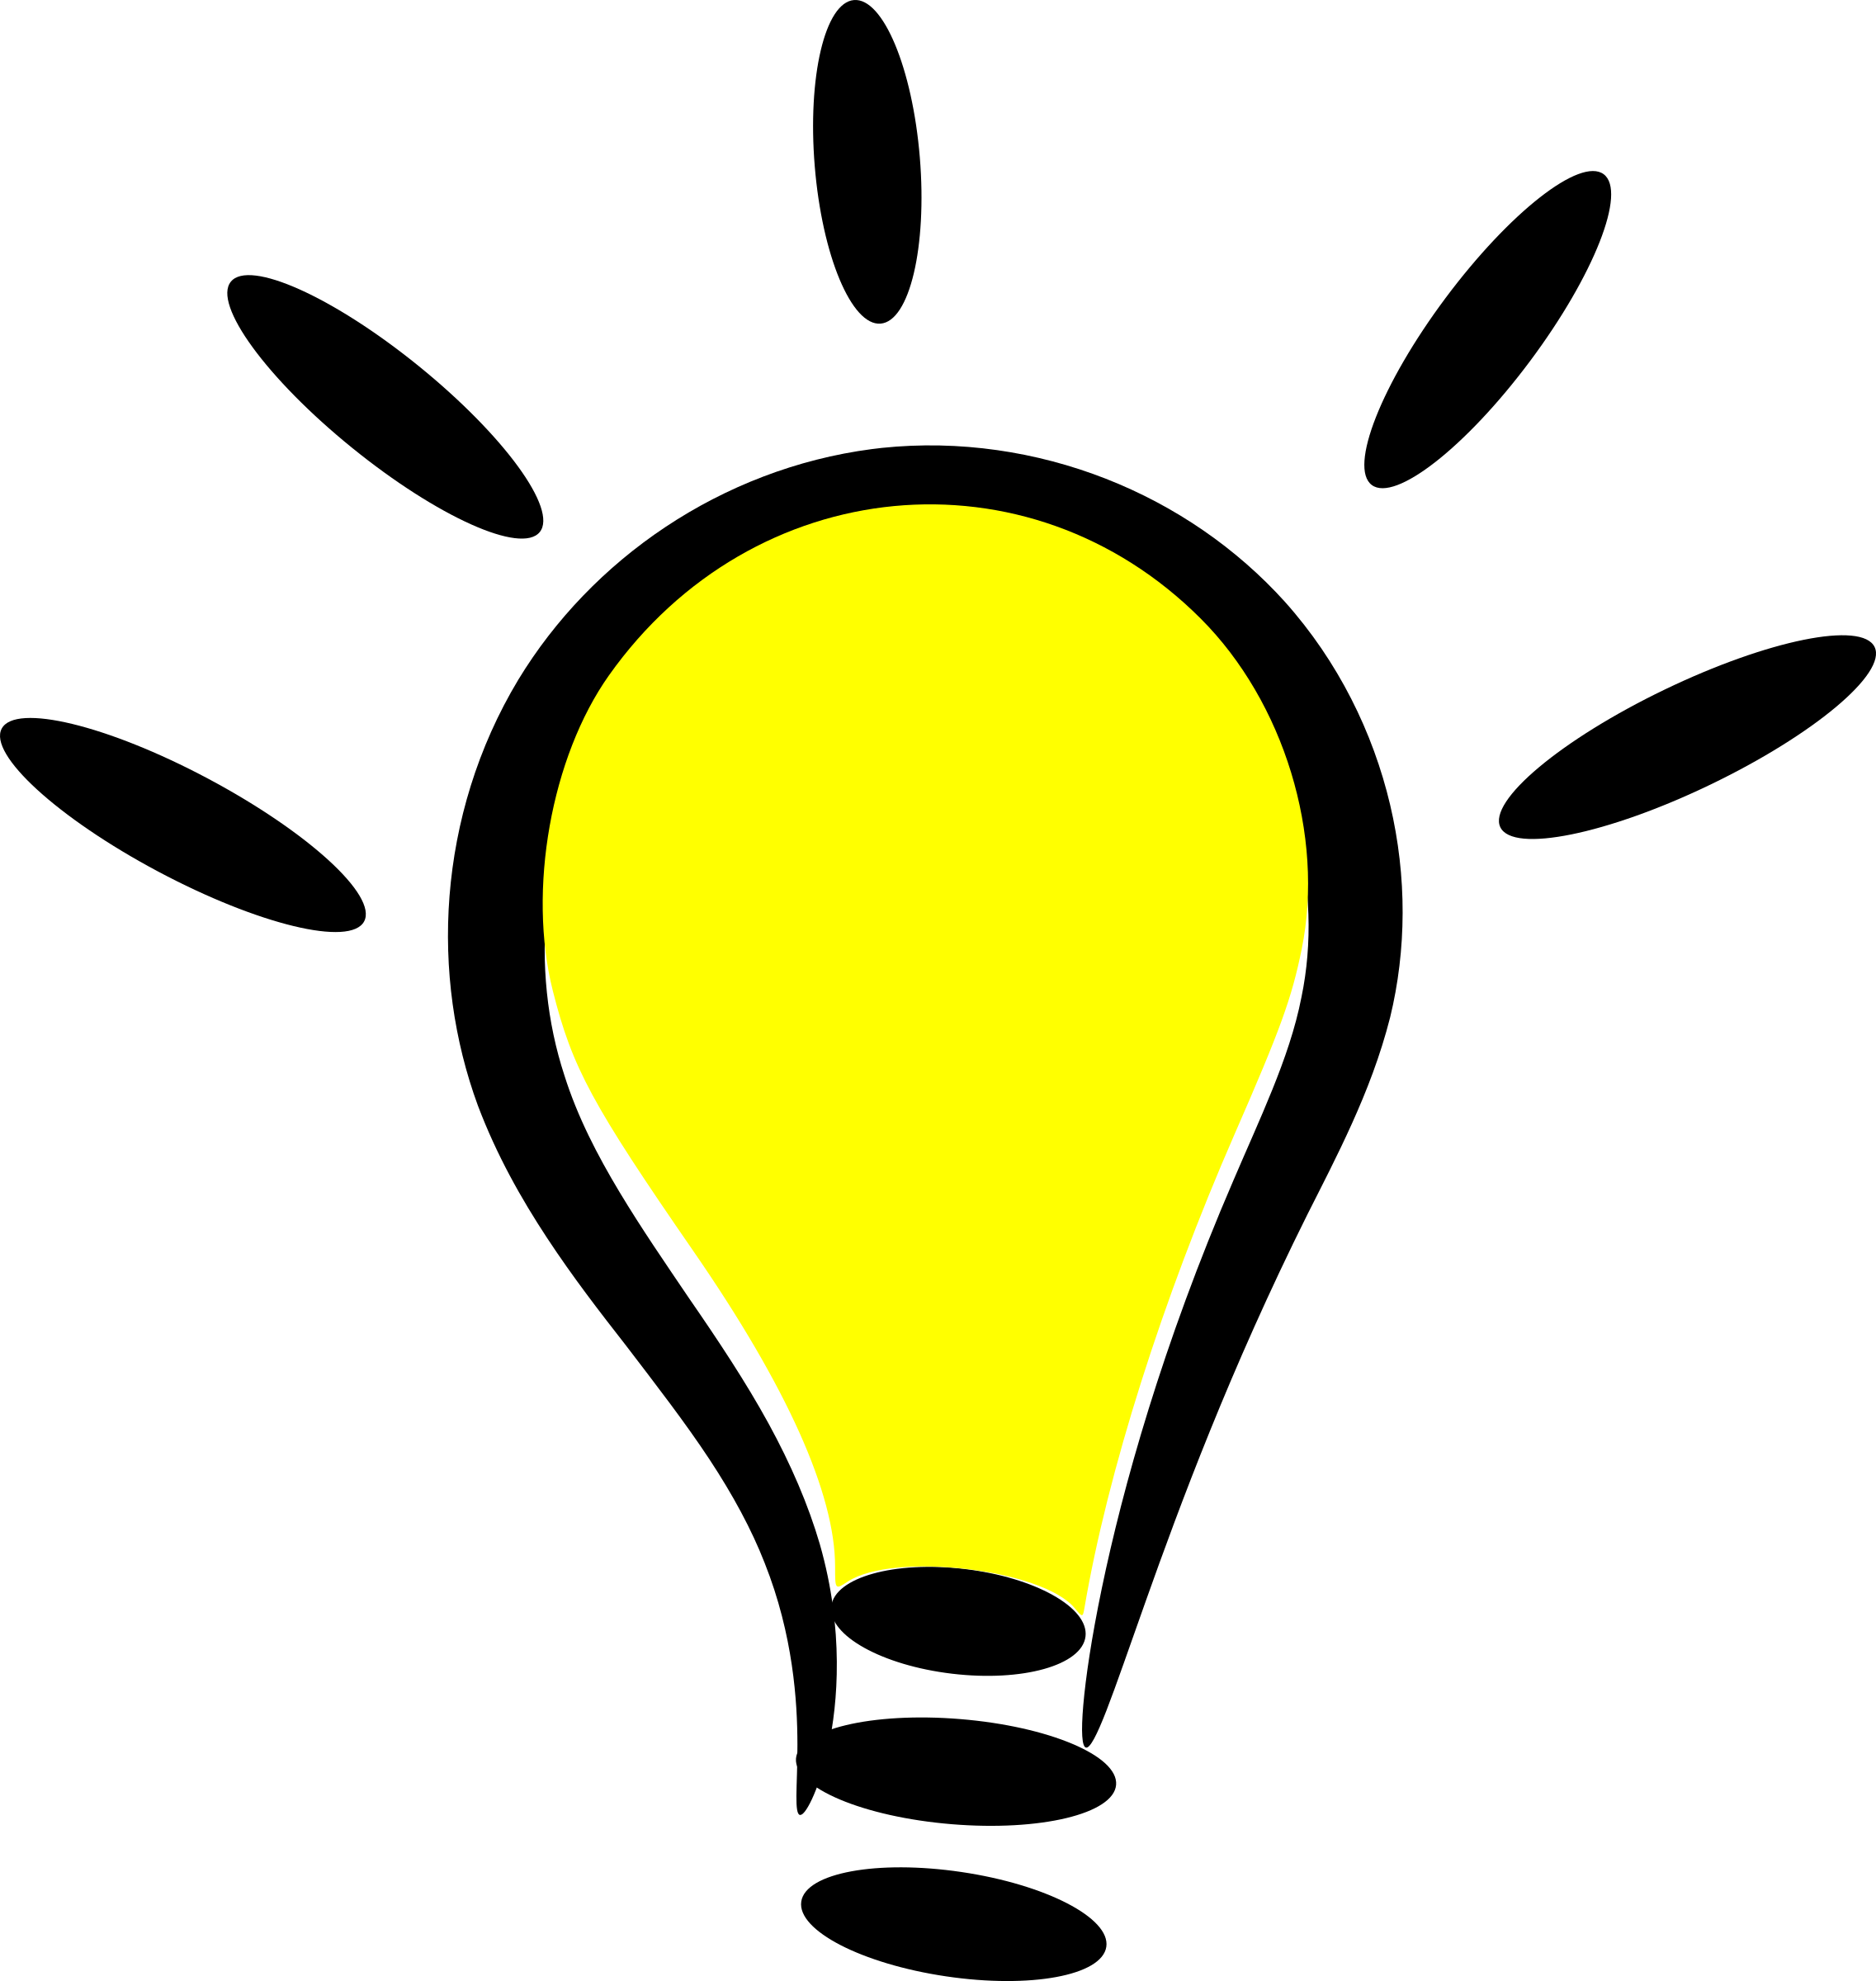 Thinking light bulb clipart